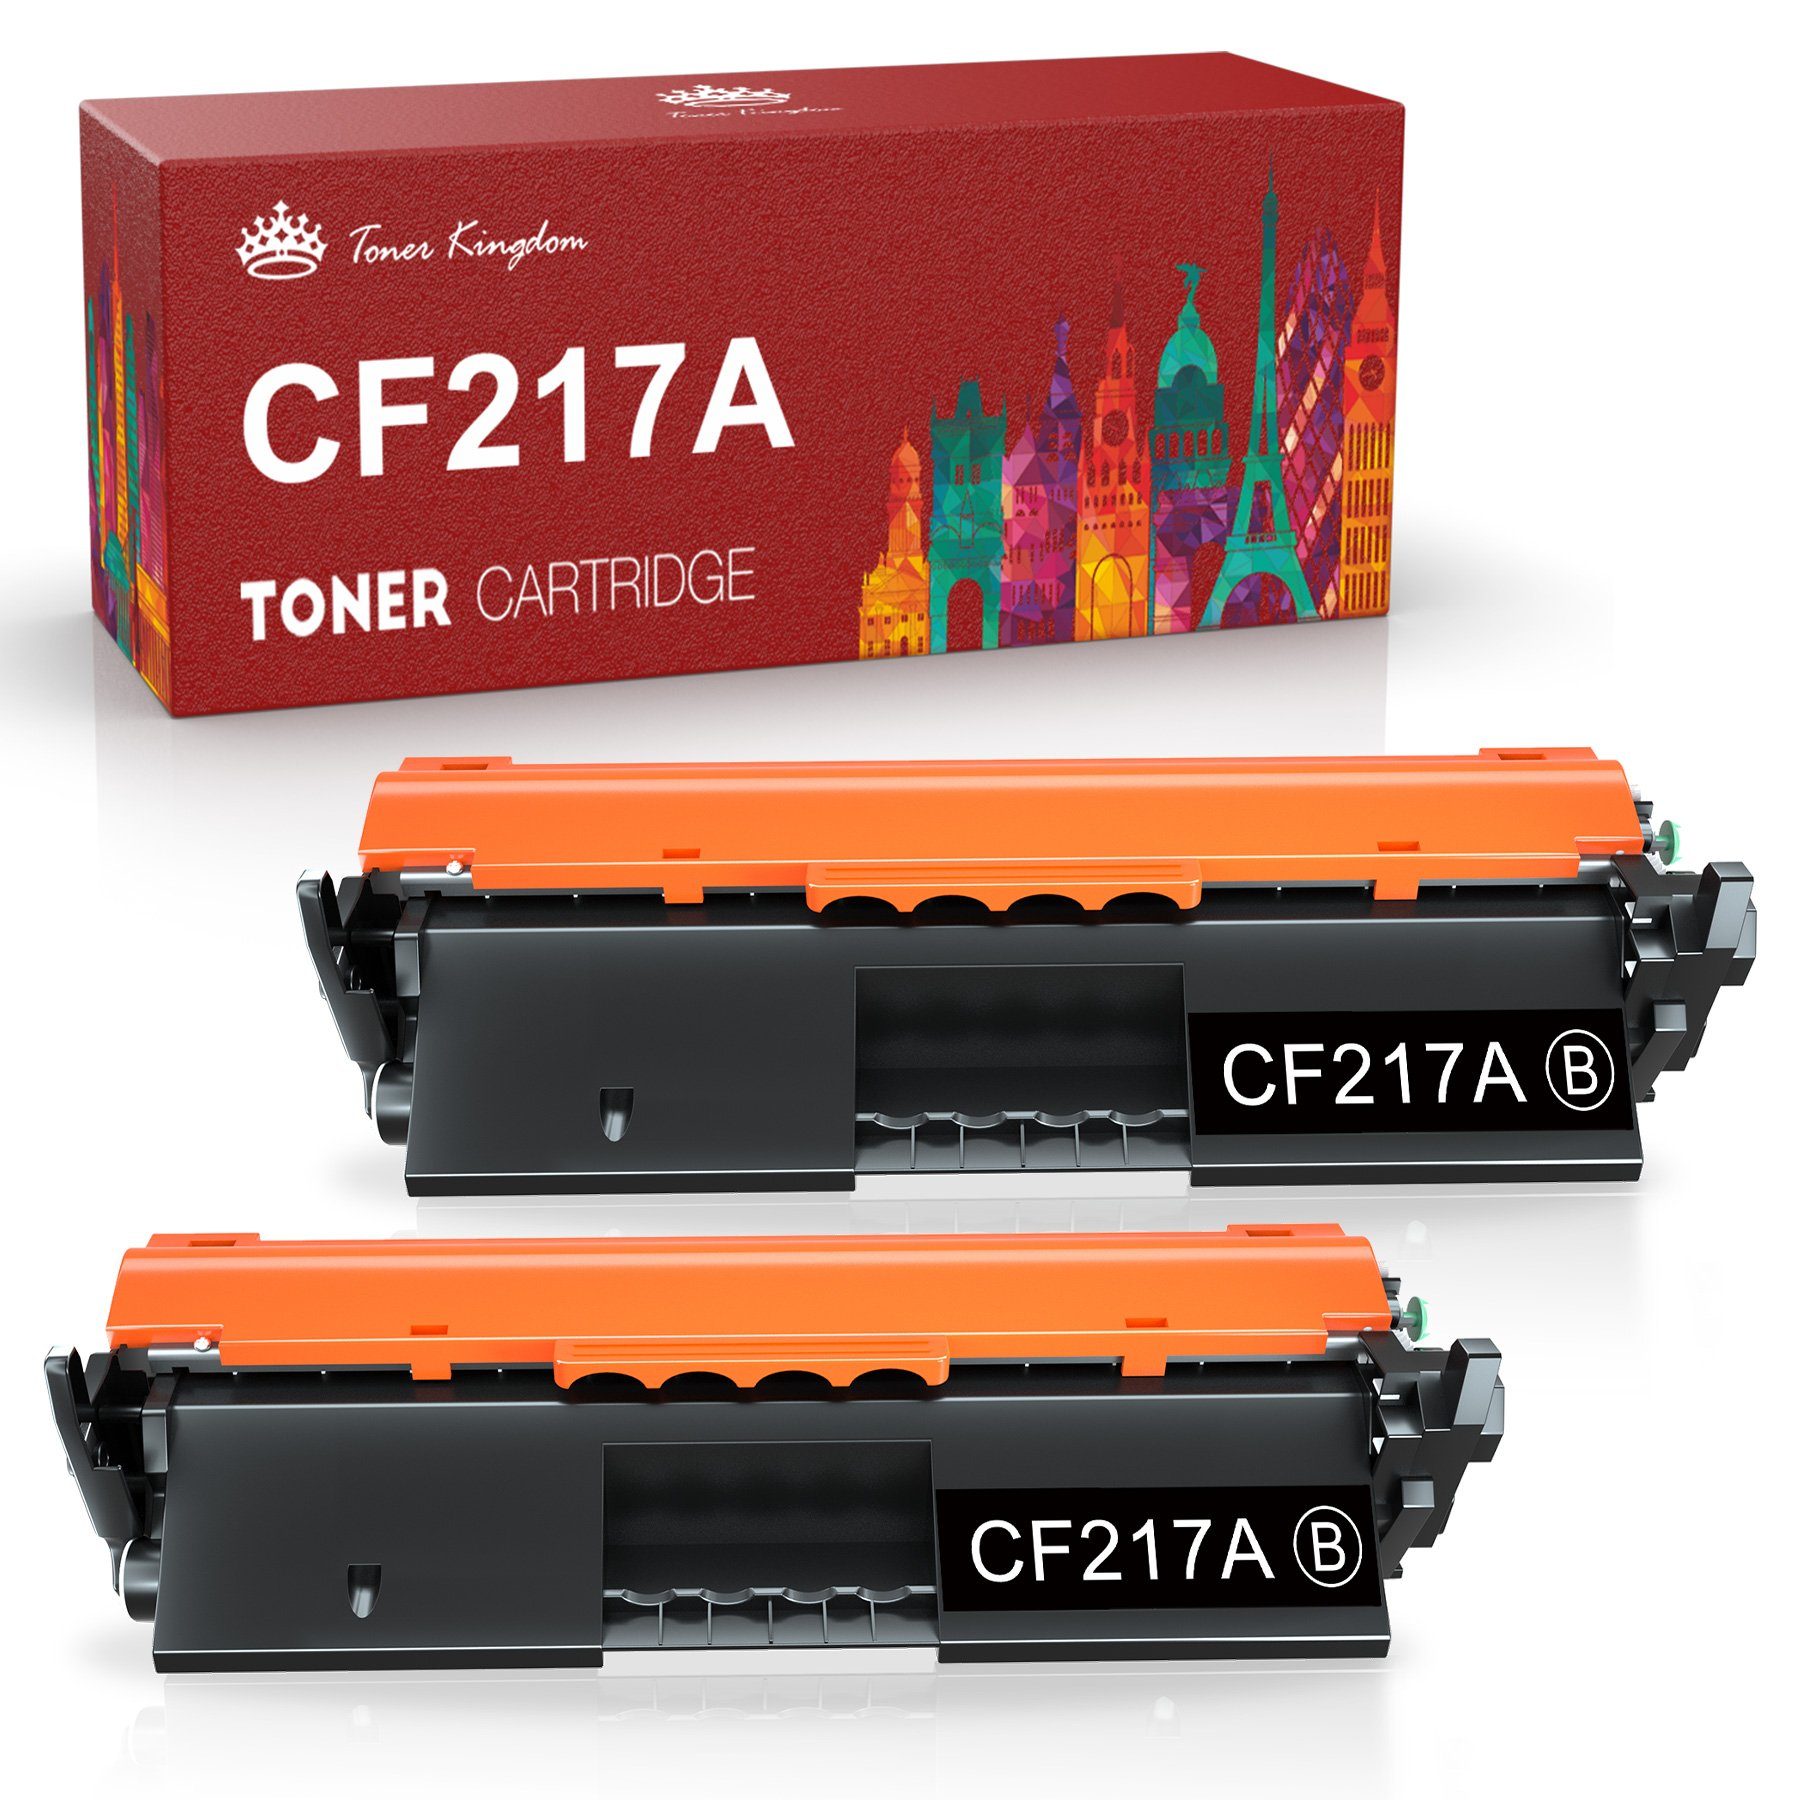 Toner Kingdom Tonerpatrone 17A CF217A für HP MFP M130nw M132 M134 mit Chip